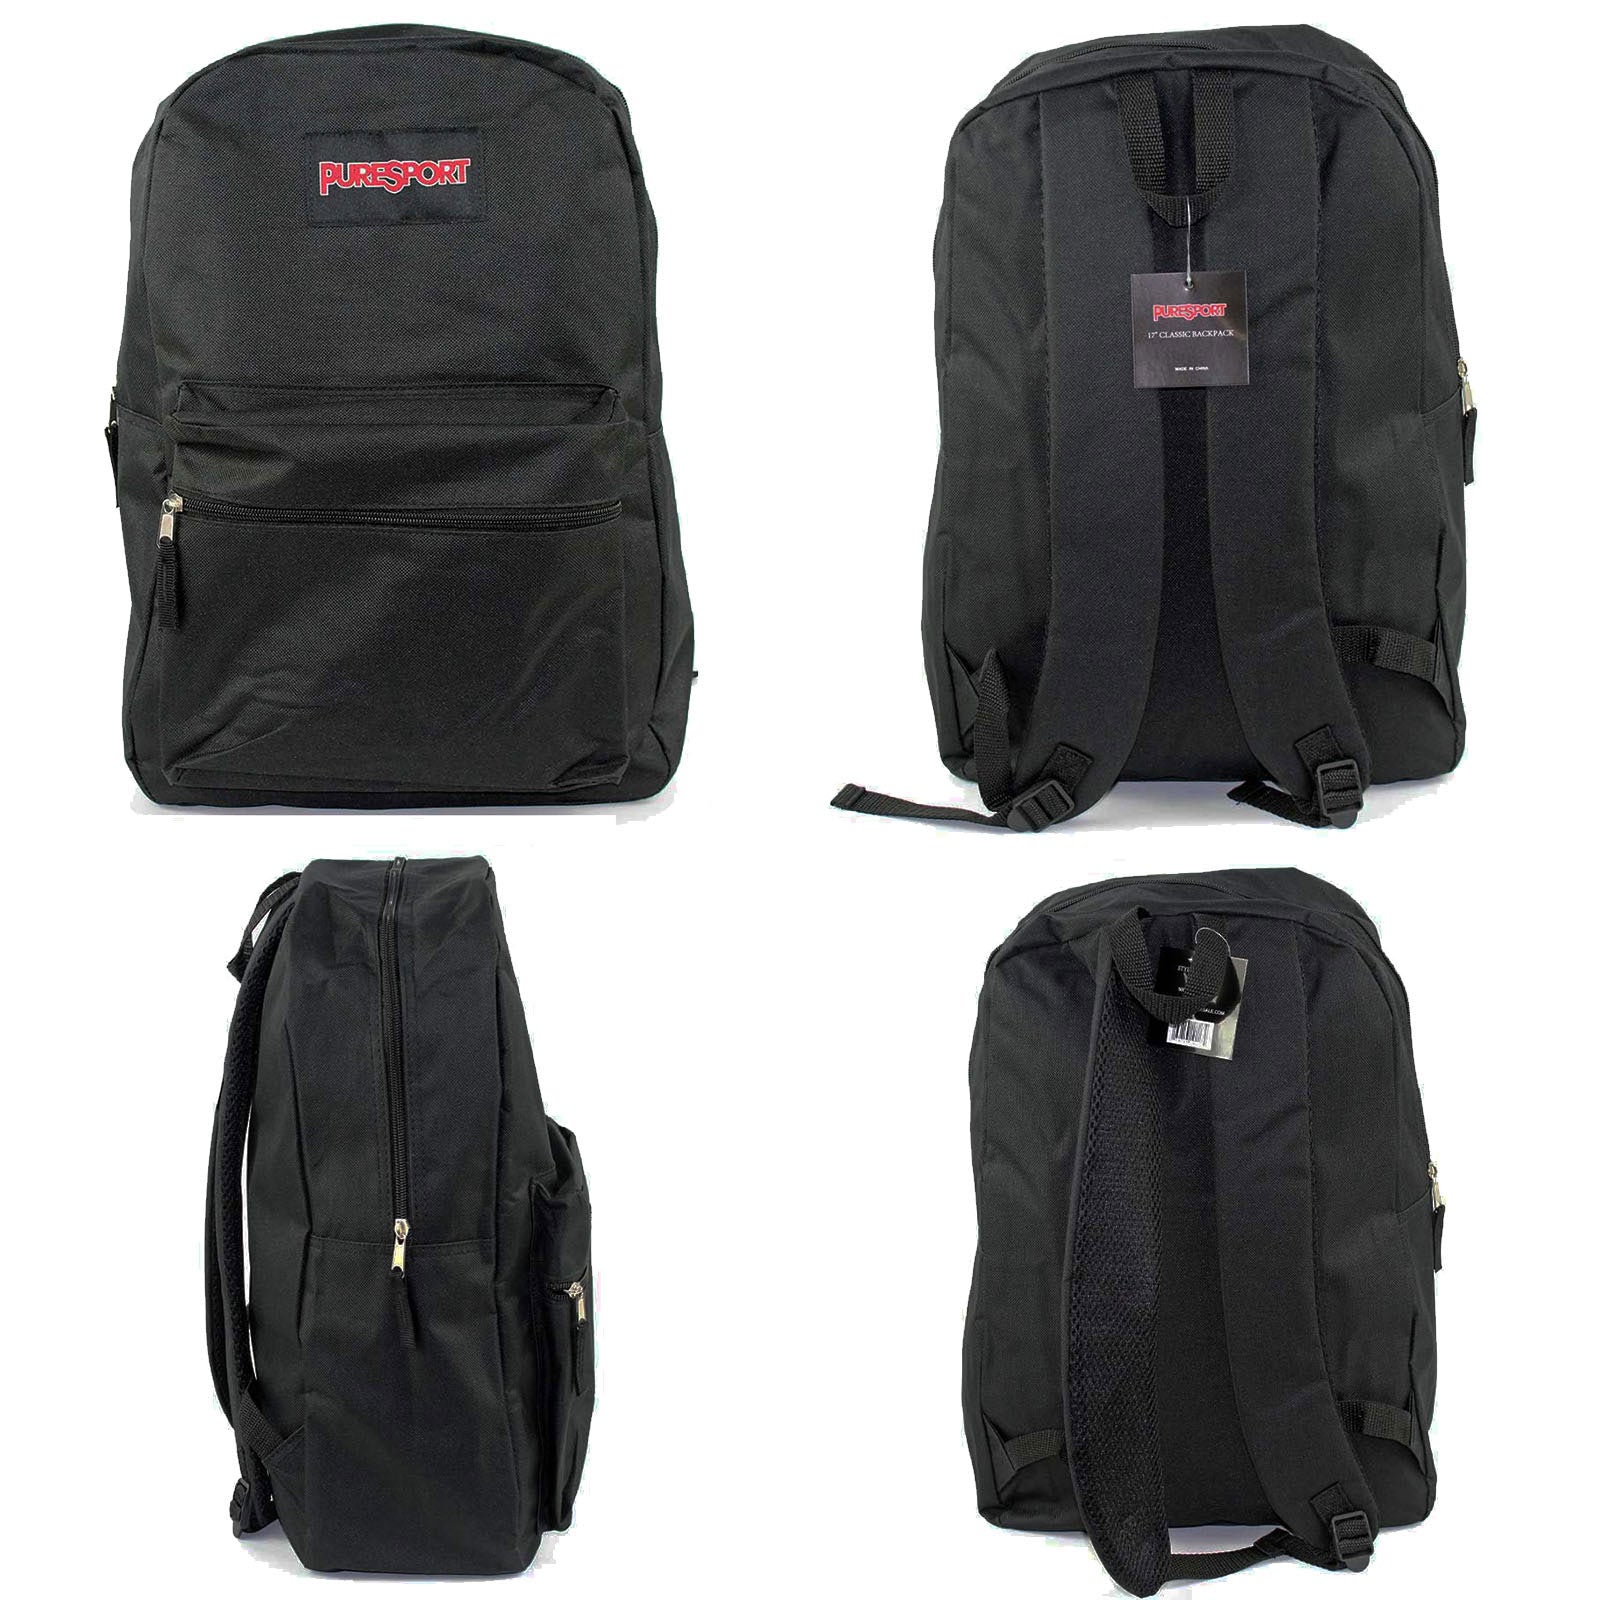 bulk wholesale backpacks in black 17 inch bookbags for back to school